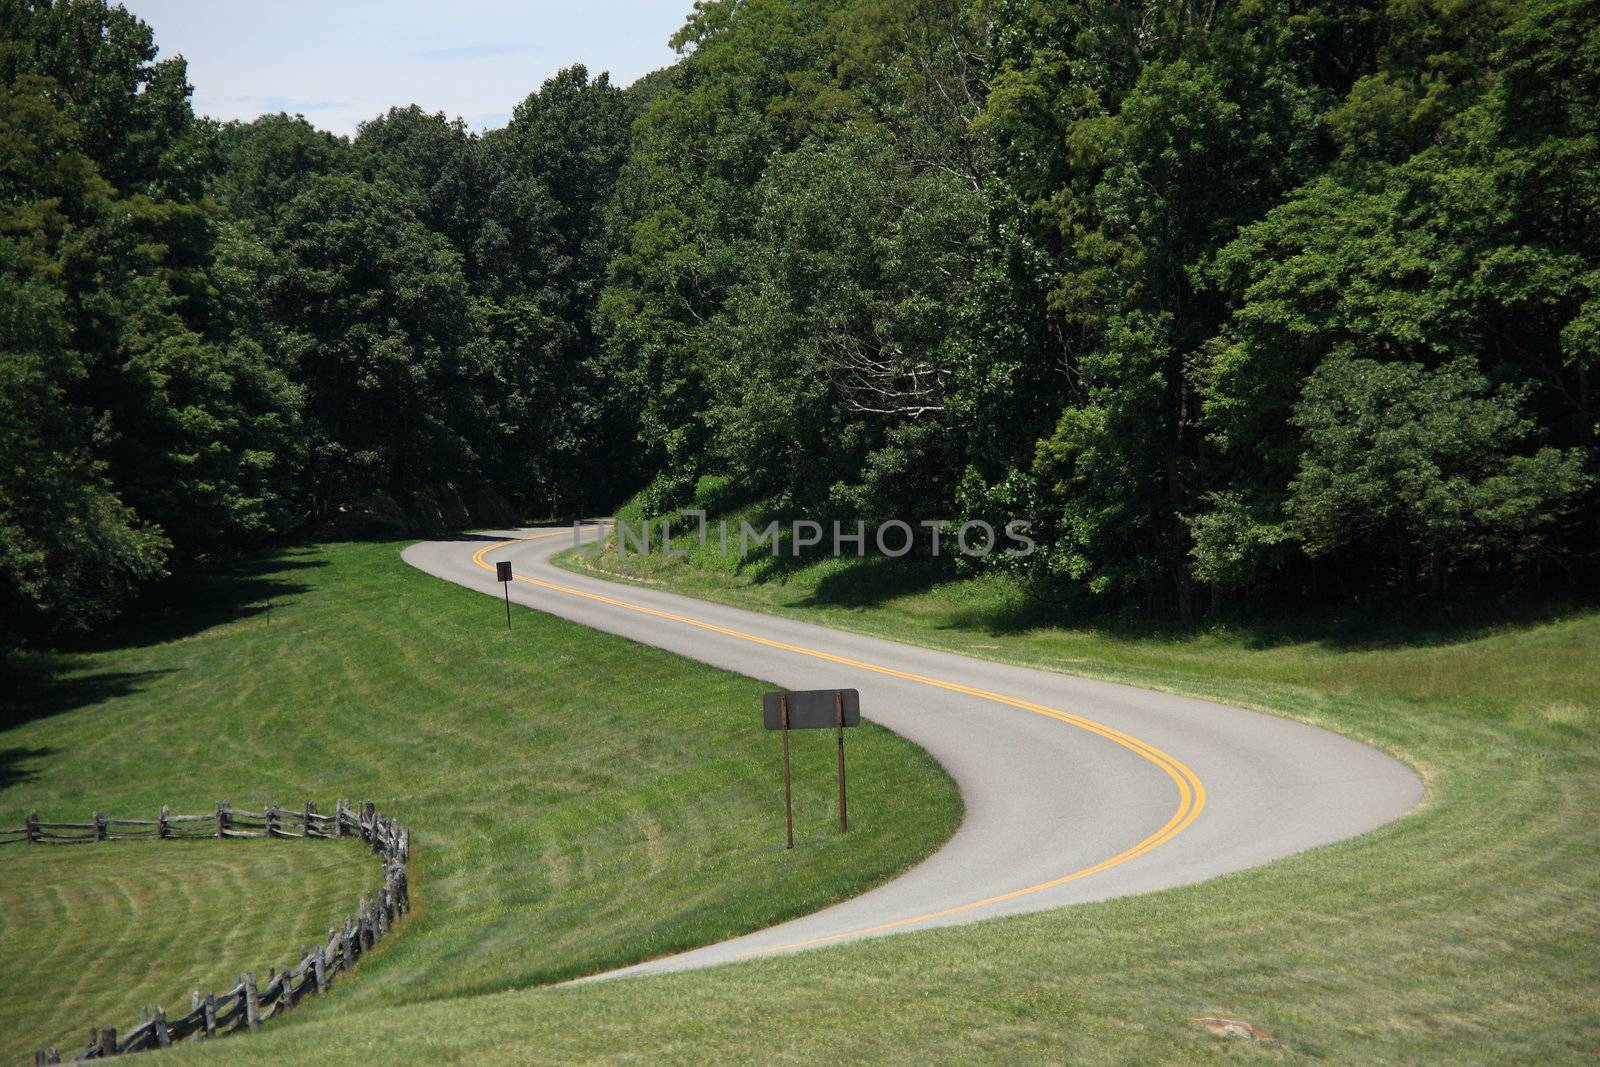 A winding road through Virginia's scenic Blue Ridge Mountains.